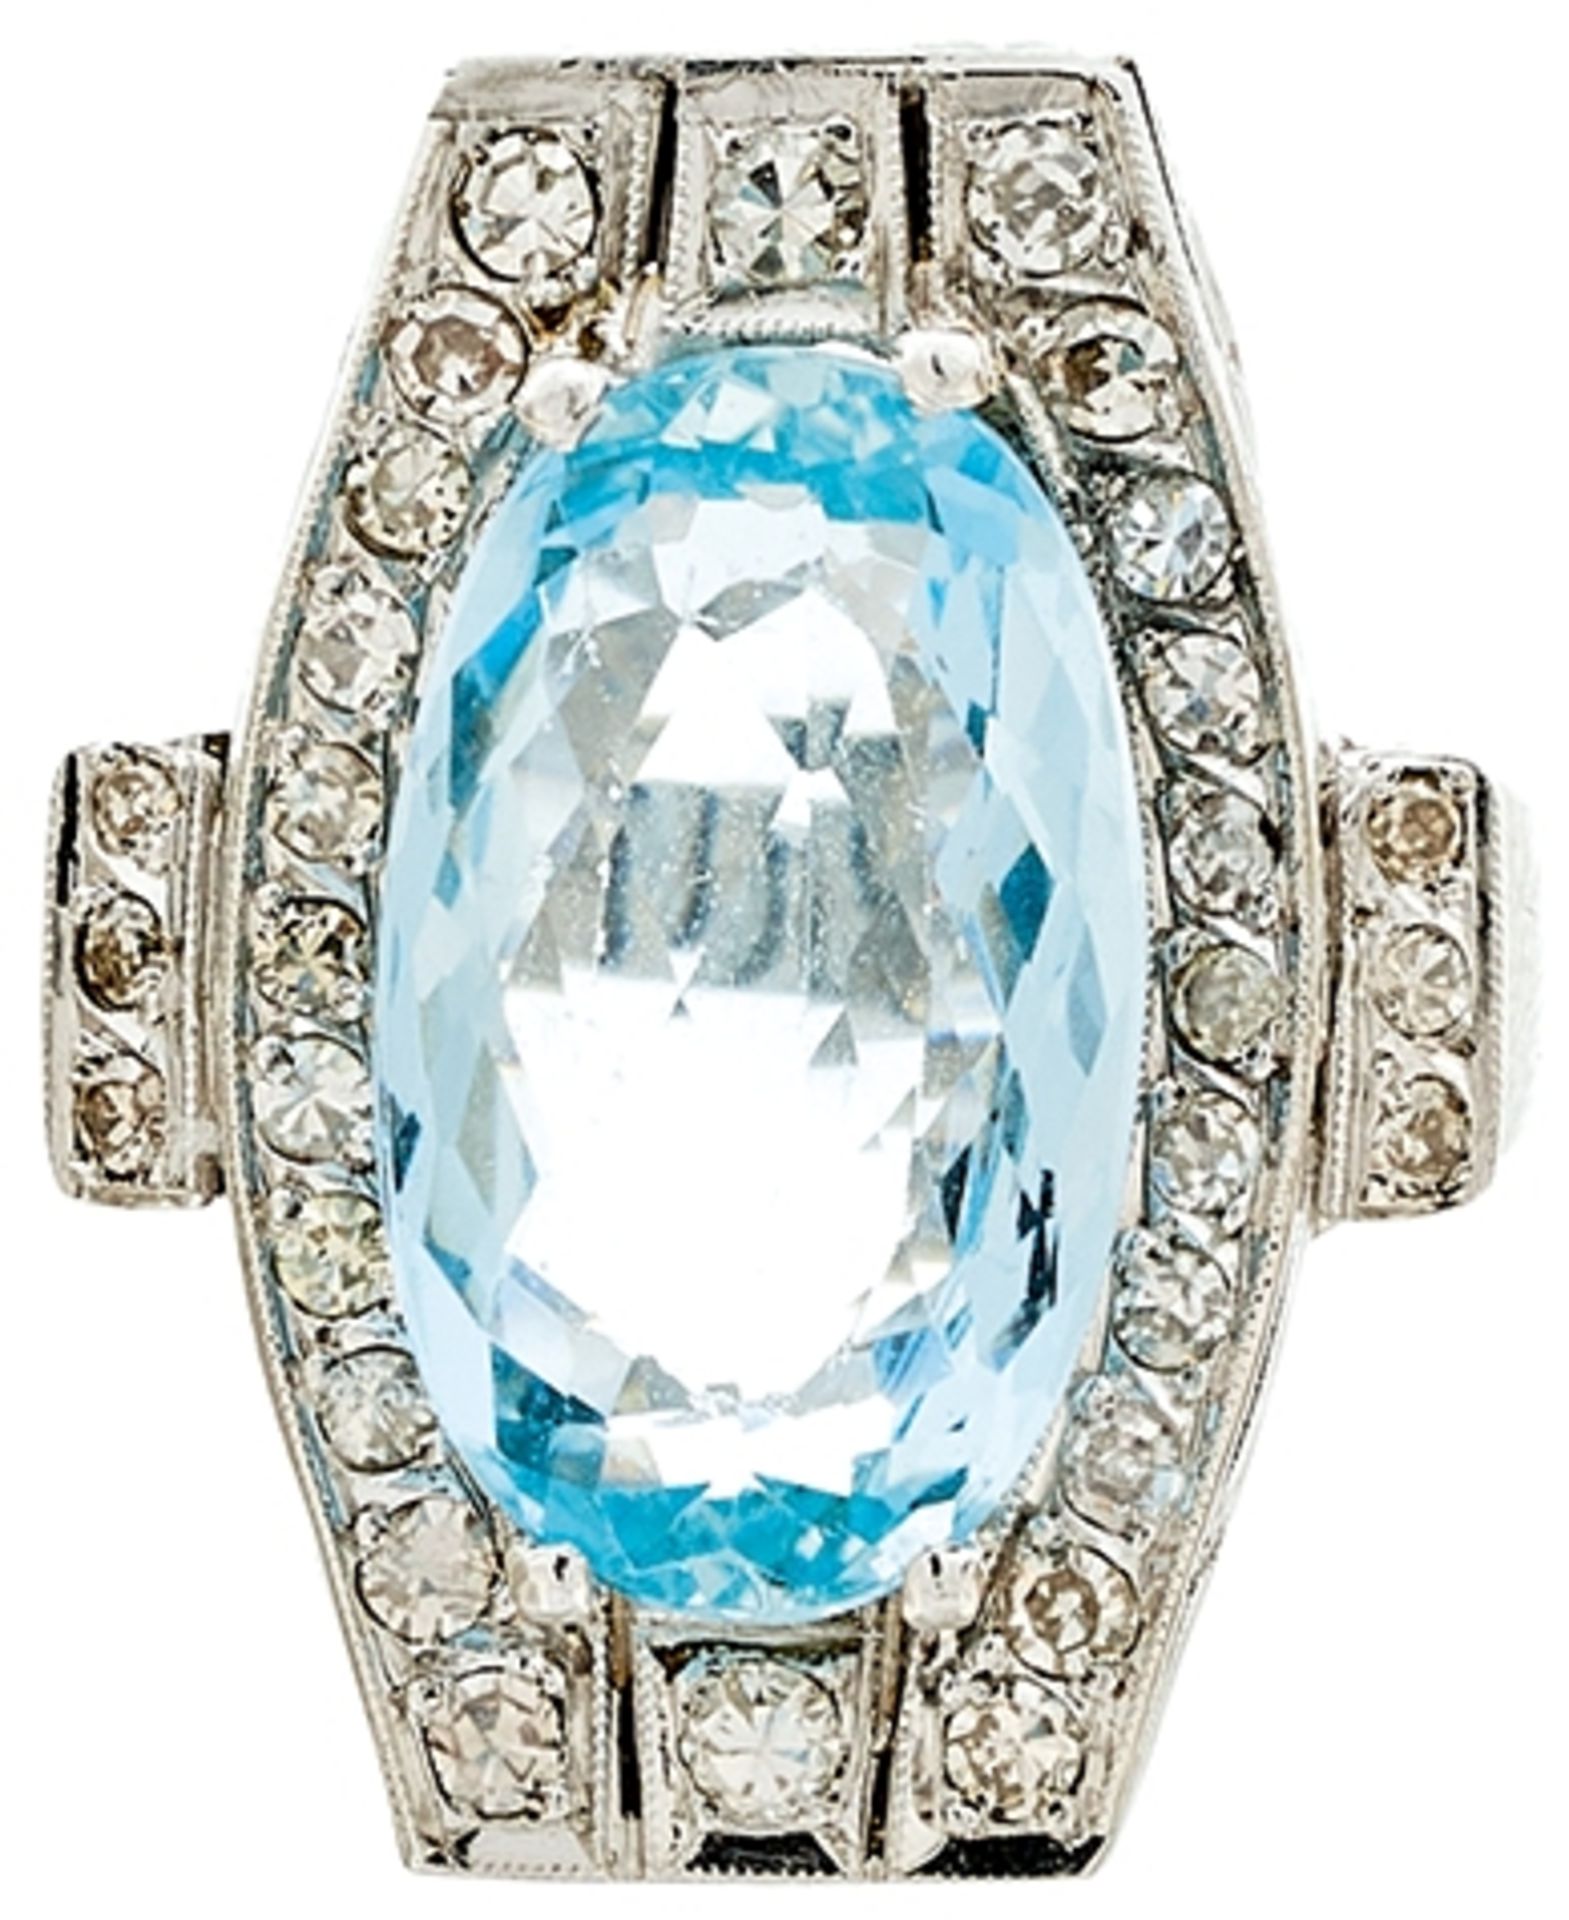 Aquamarin Diamanten Ring, 900 Platin, Diamanten in Brillanten-Schliff von zus. 0,95ct, Aquamarin in